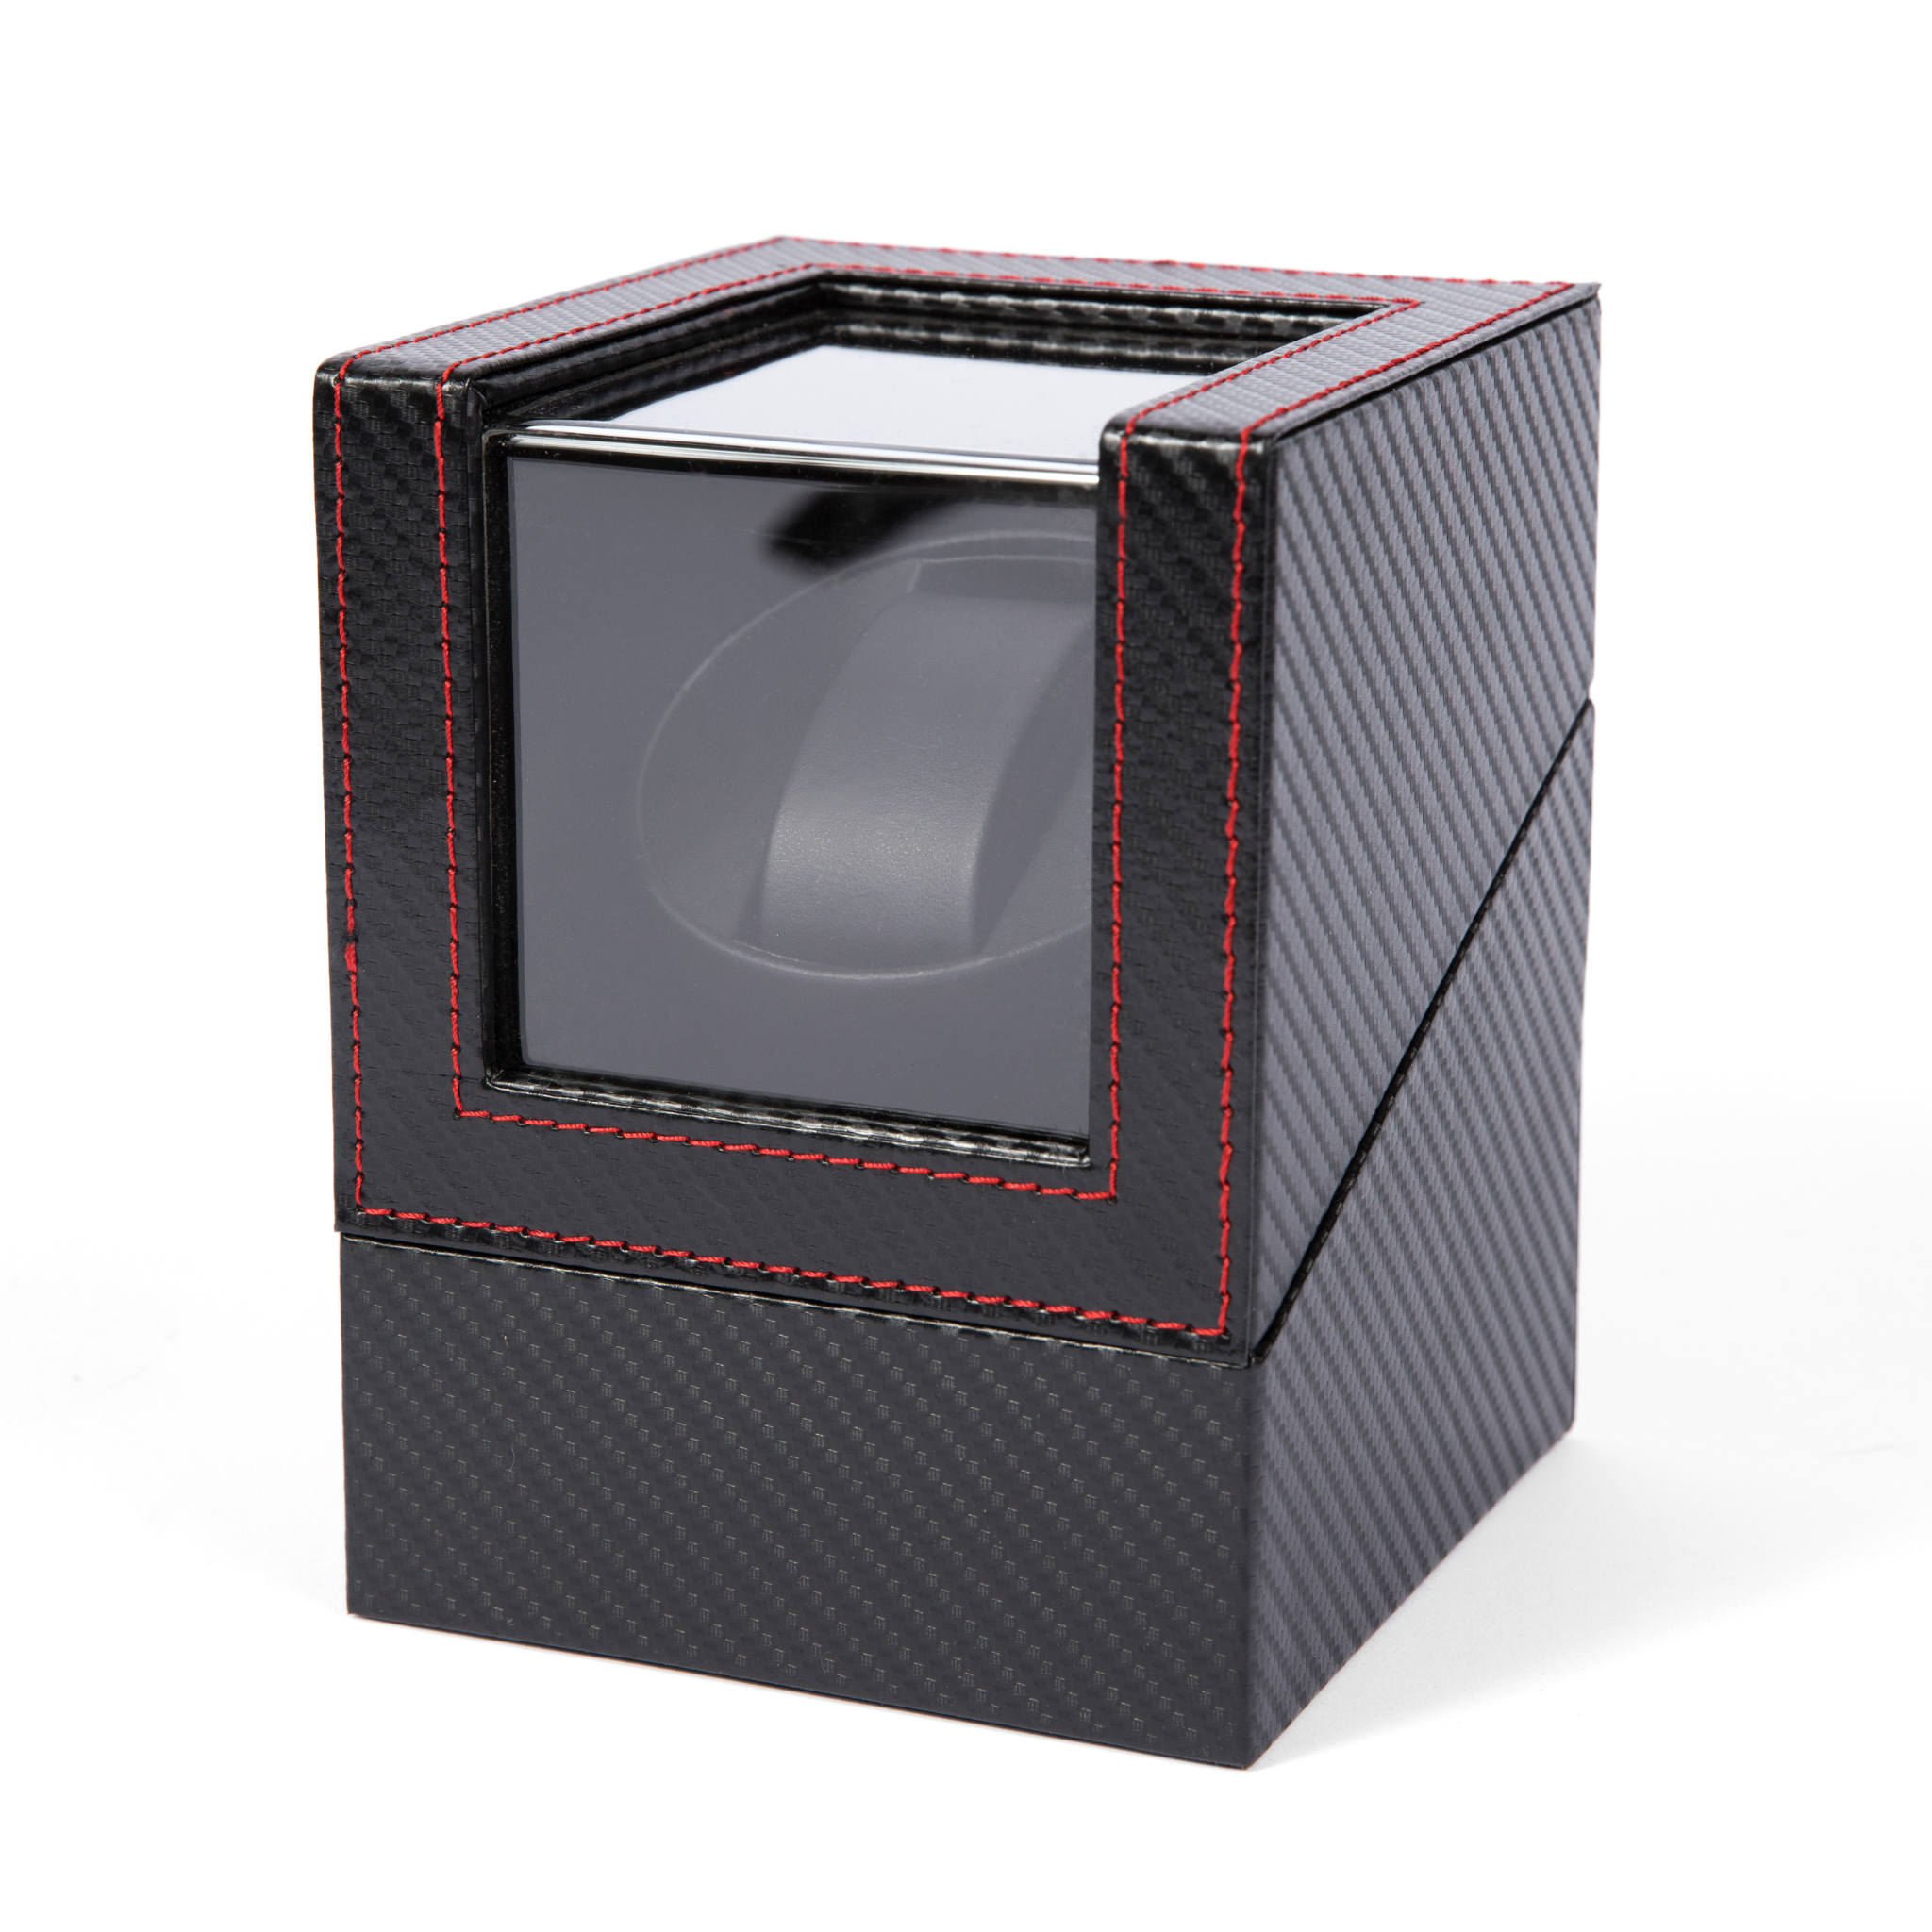 Automatic Single Watch Winder Box - Carbon Fiber Leather Black